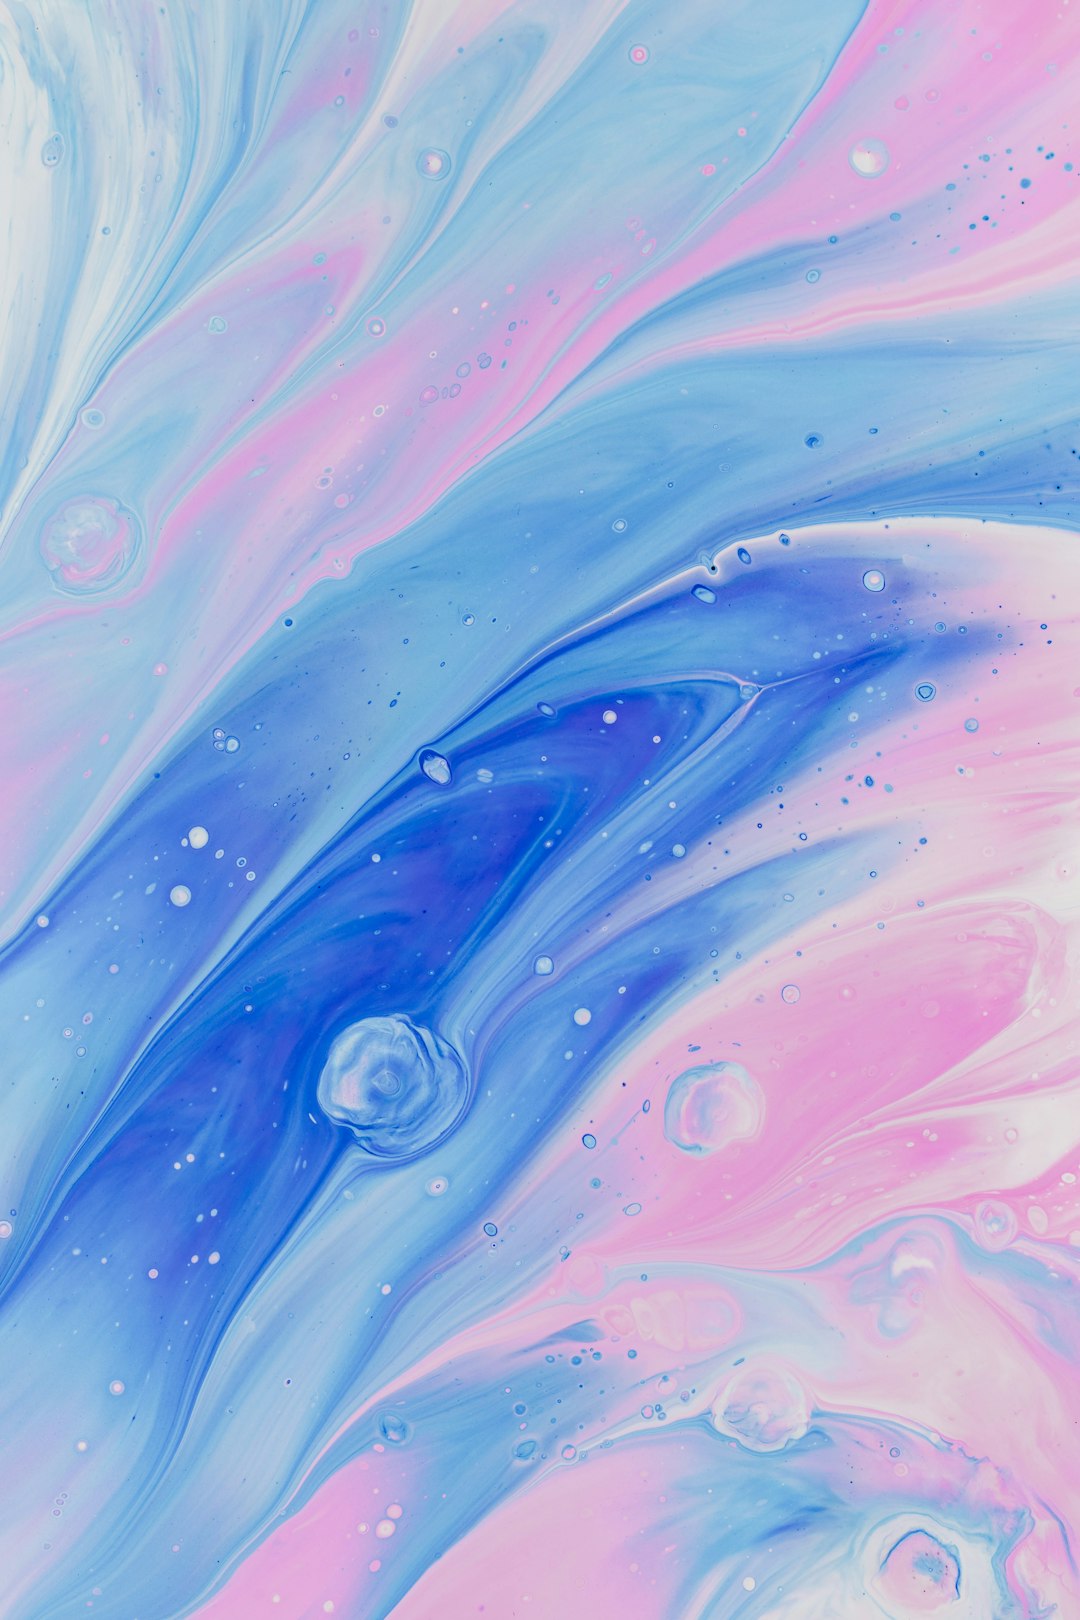 Pastel Wallpapers: Download [500+ HQ] Unsplash